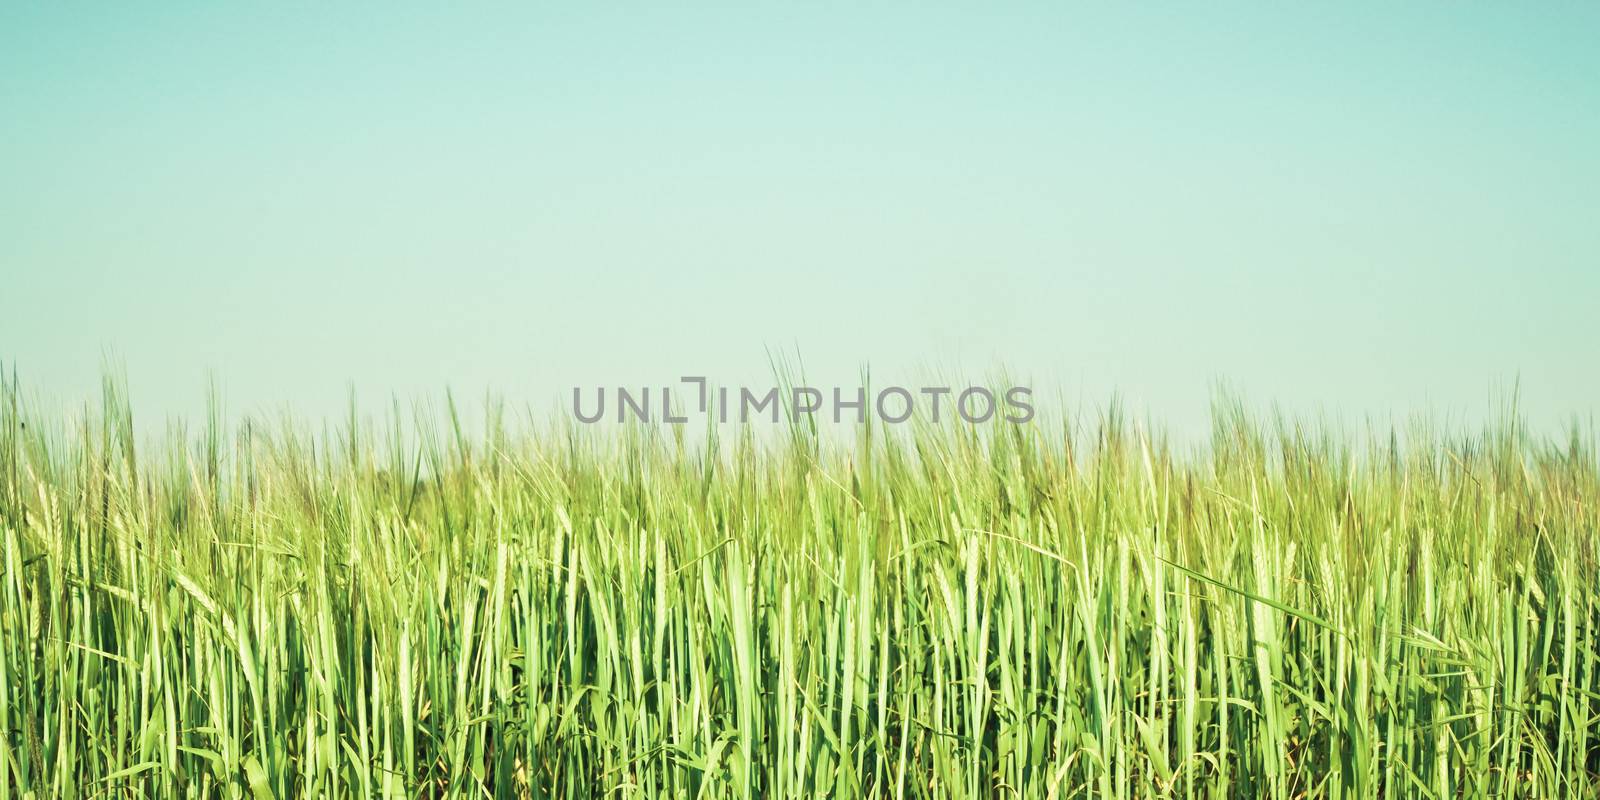 Barley crop growing in the summer in a field